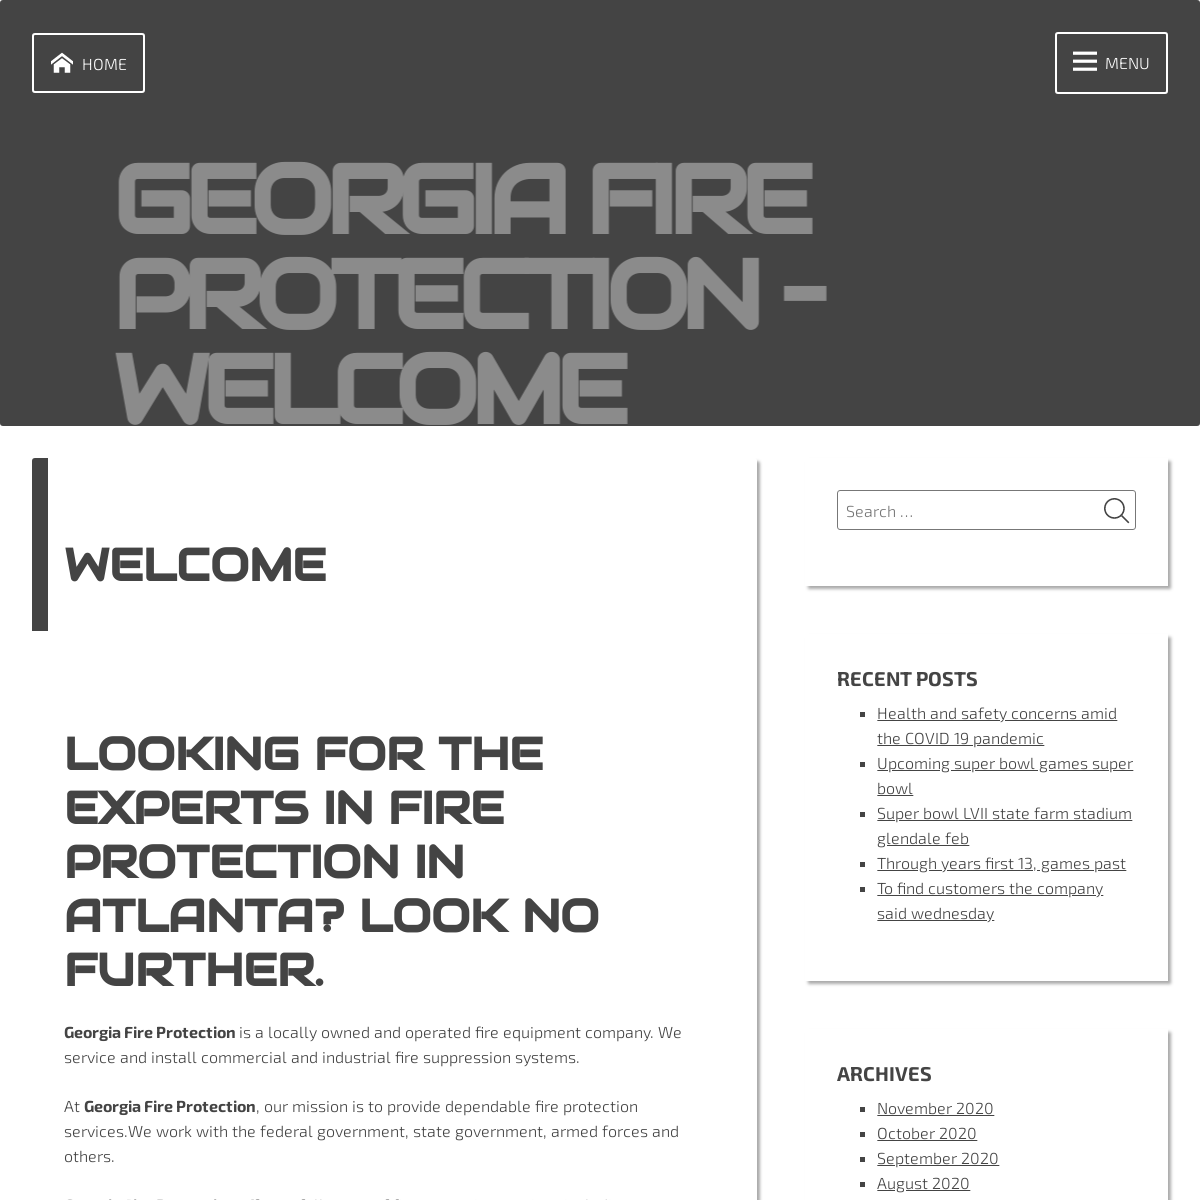 A complete backup of georgiafireprotectiontuckerga.com